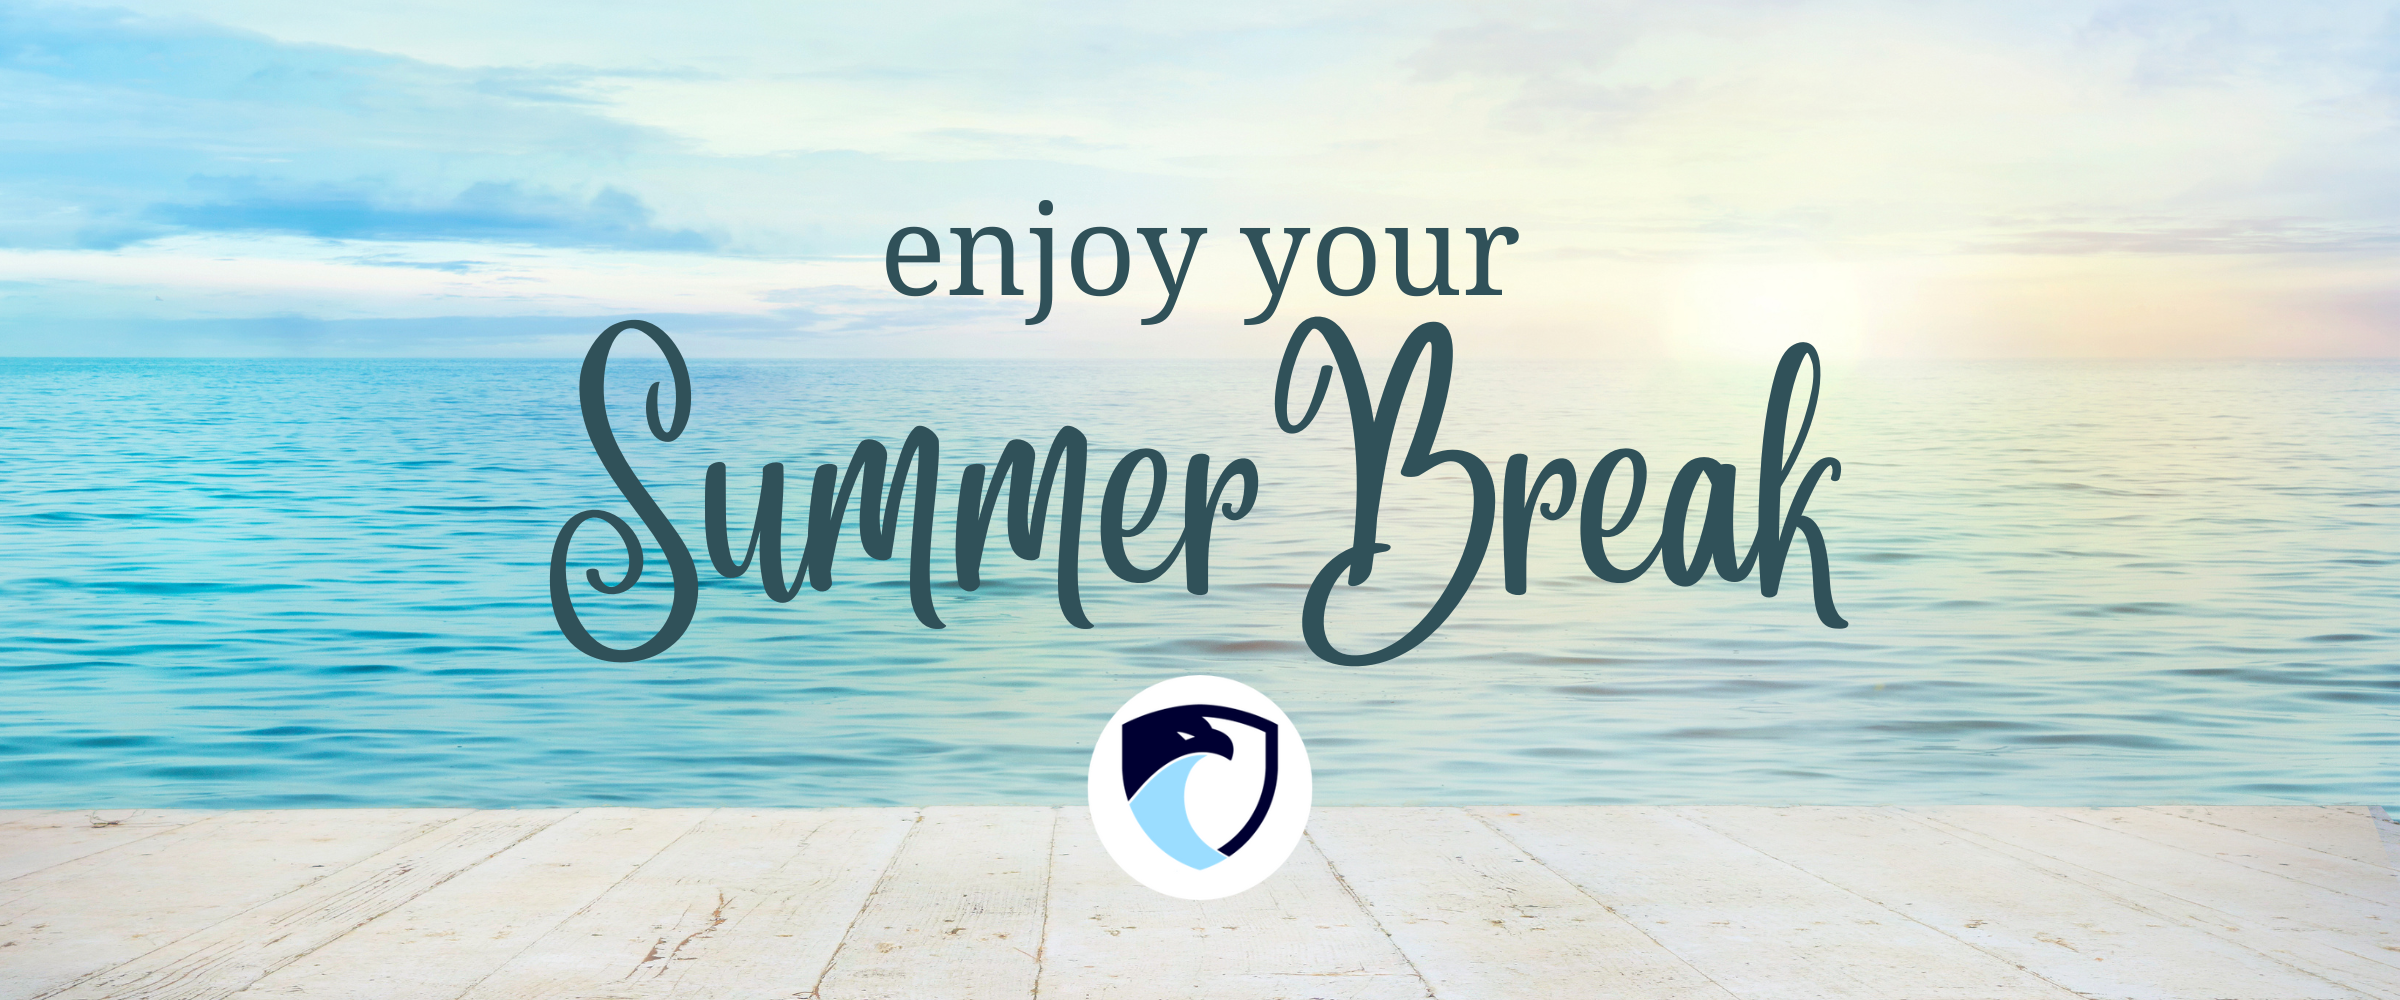 enjoy your summer break